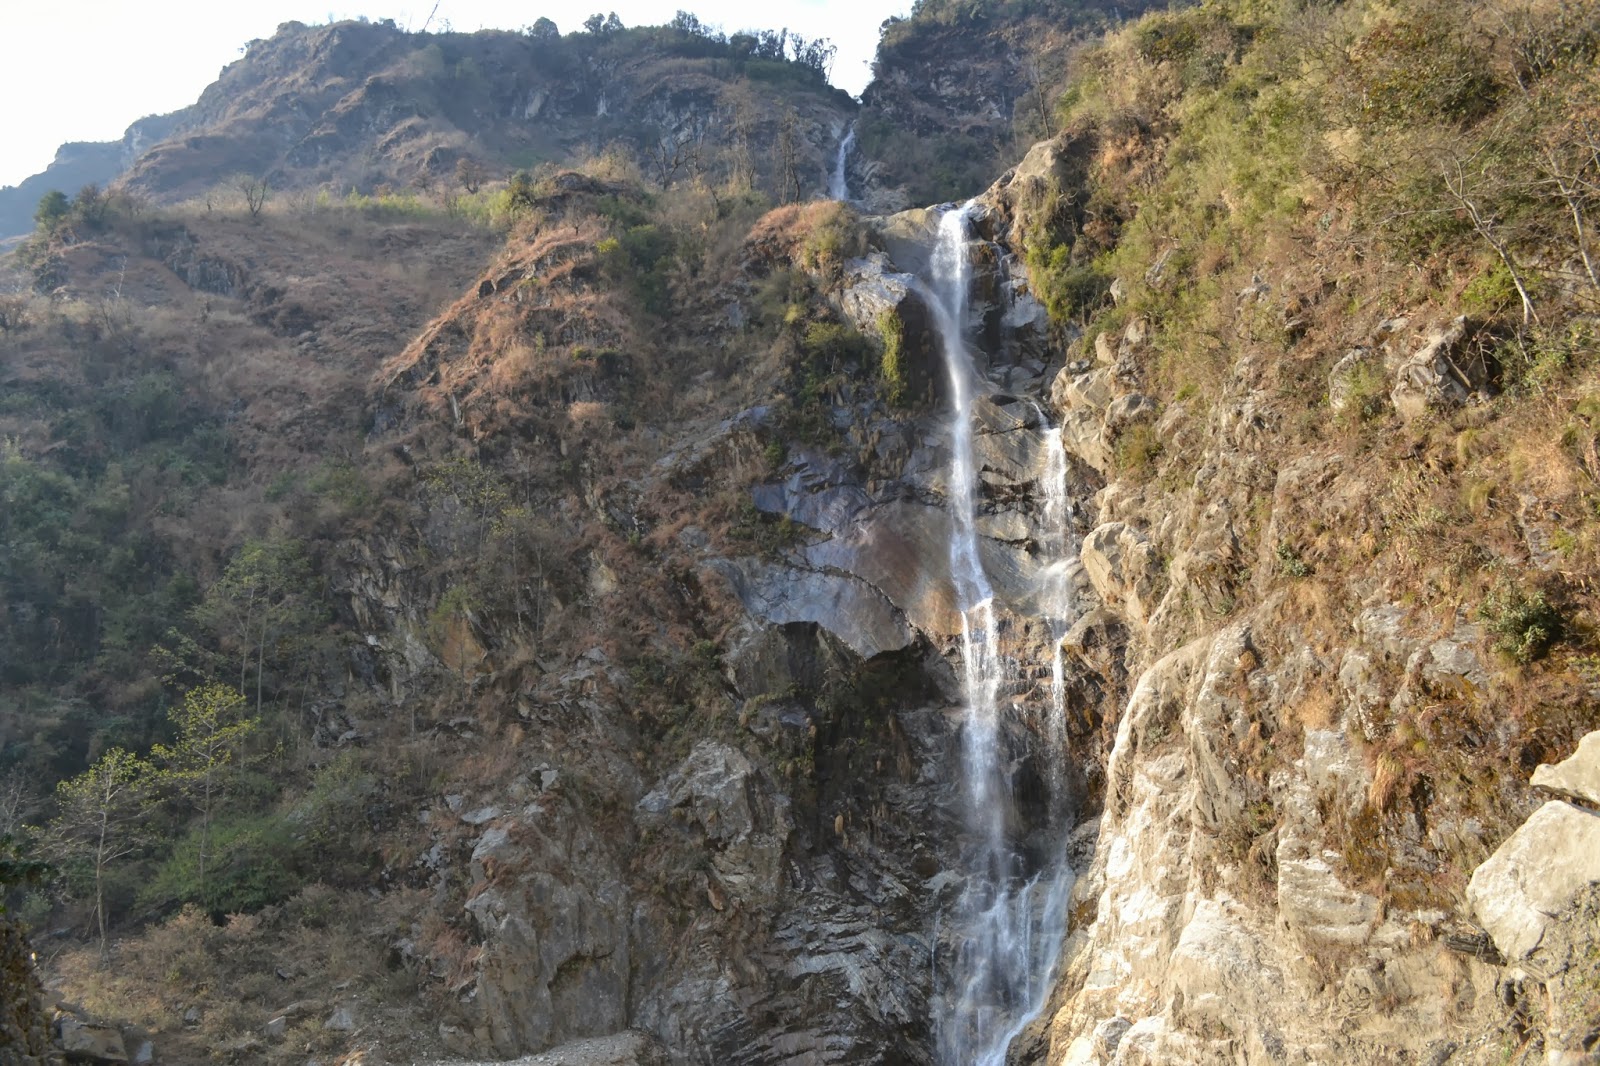 Bhima fall/Amitabh bachhan fall